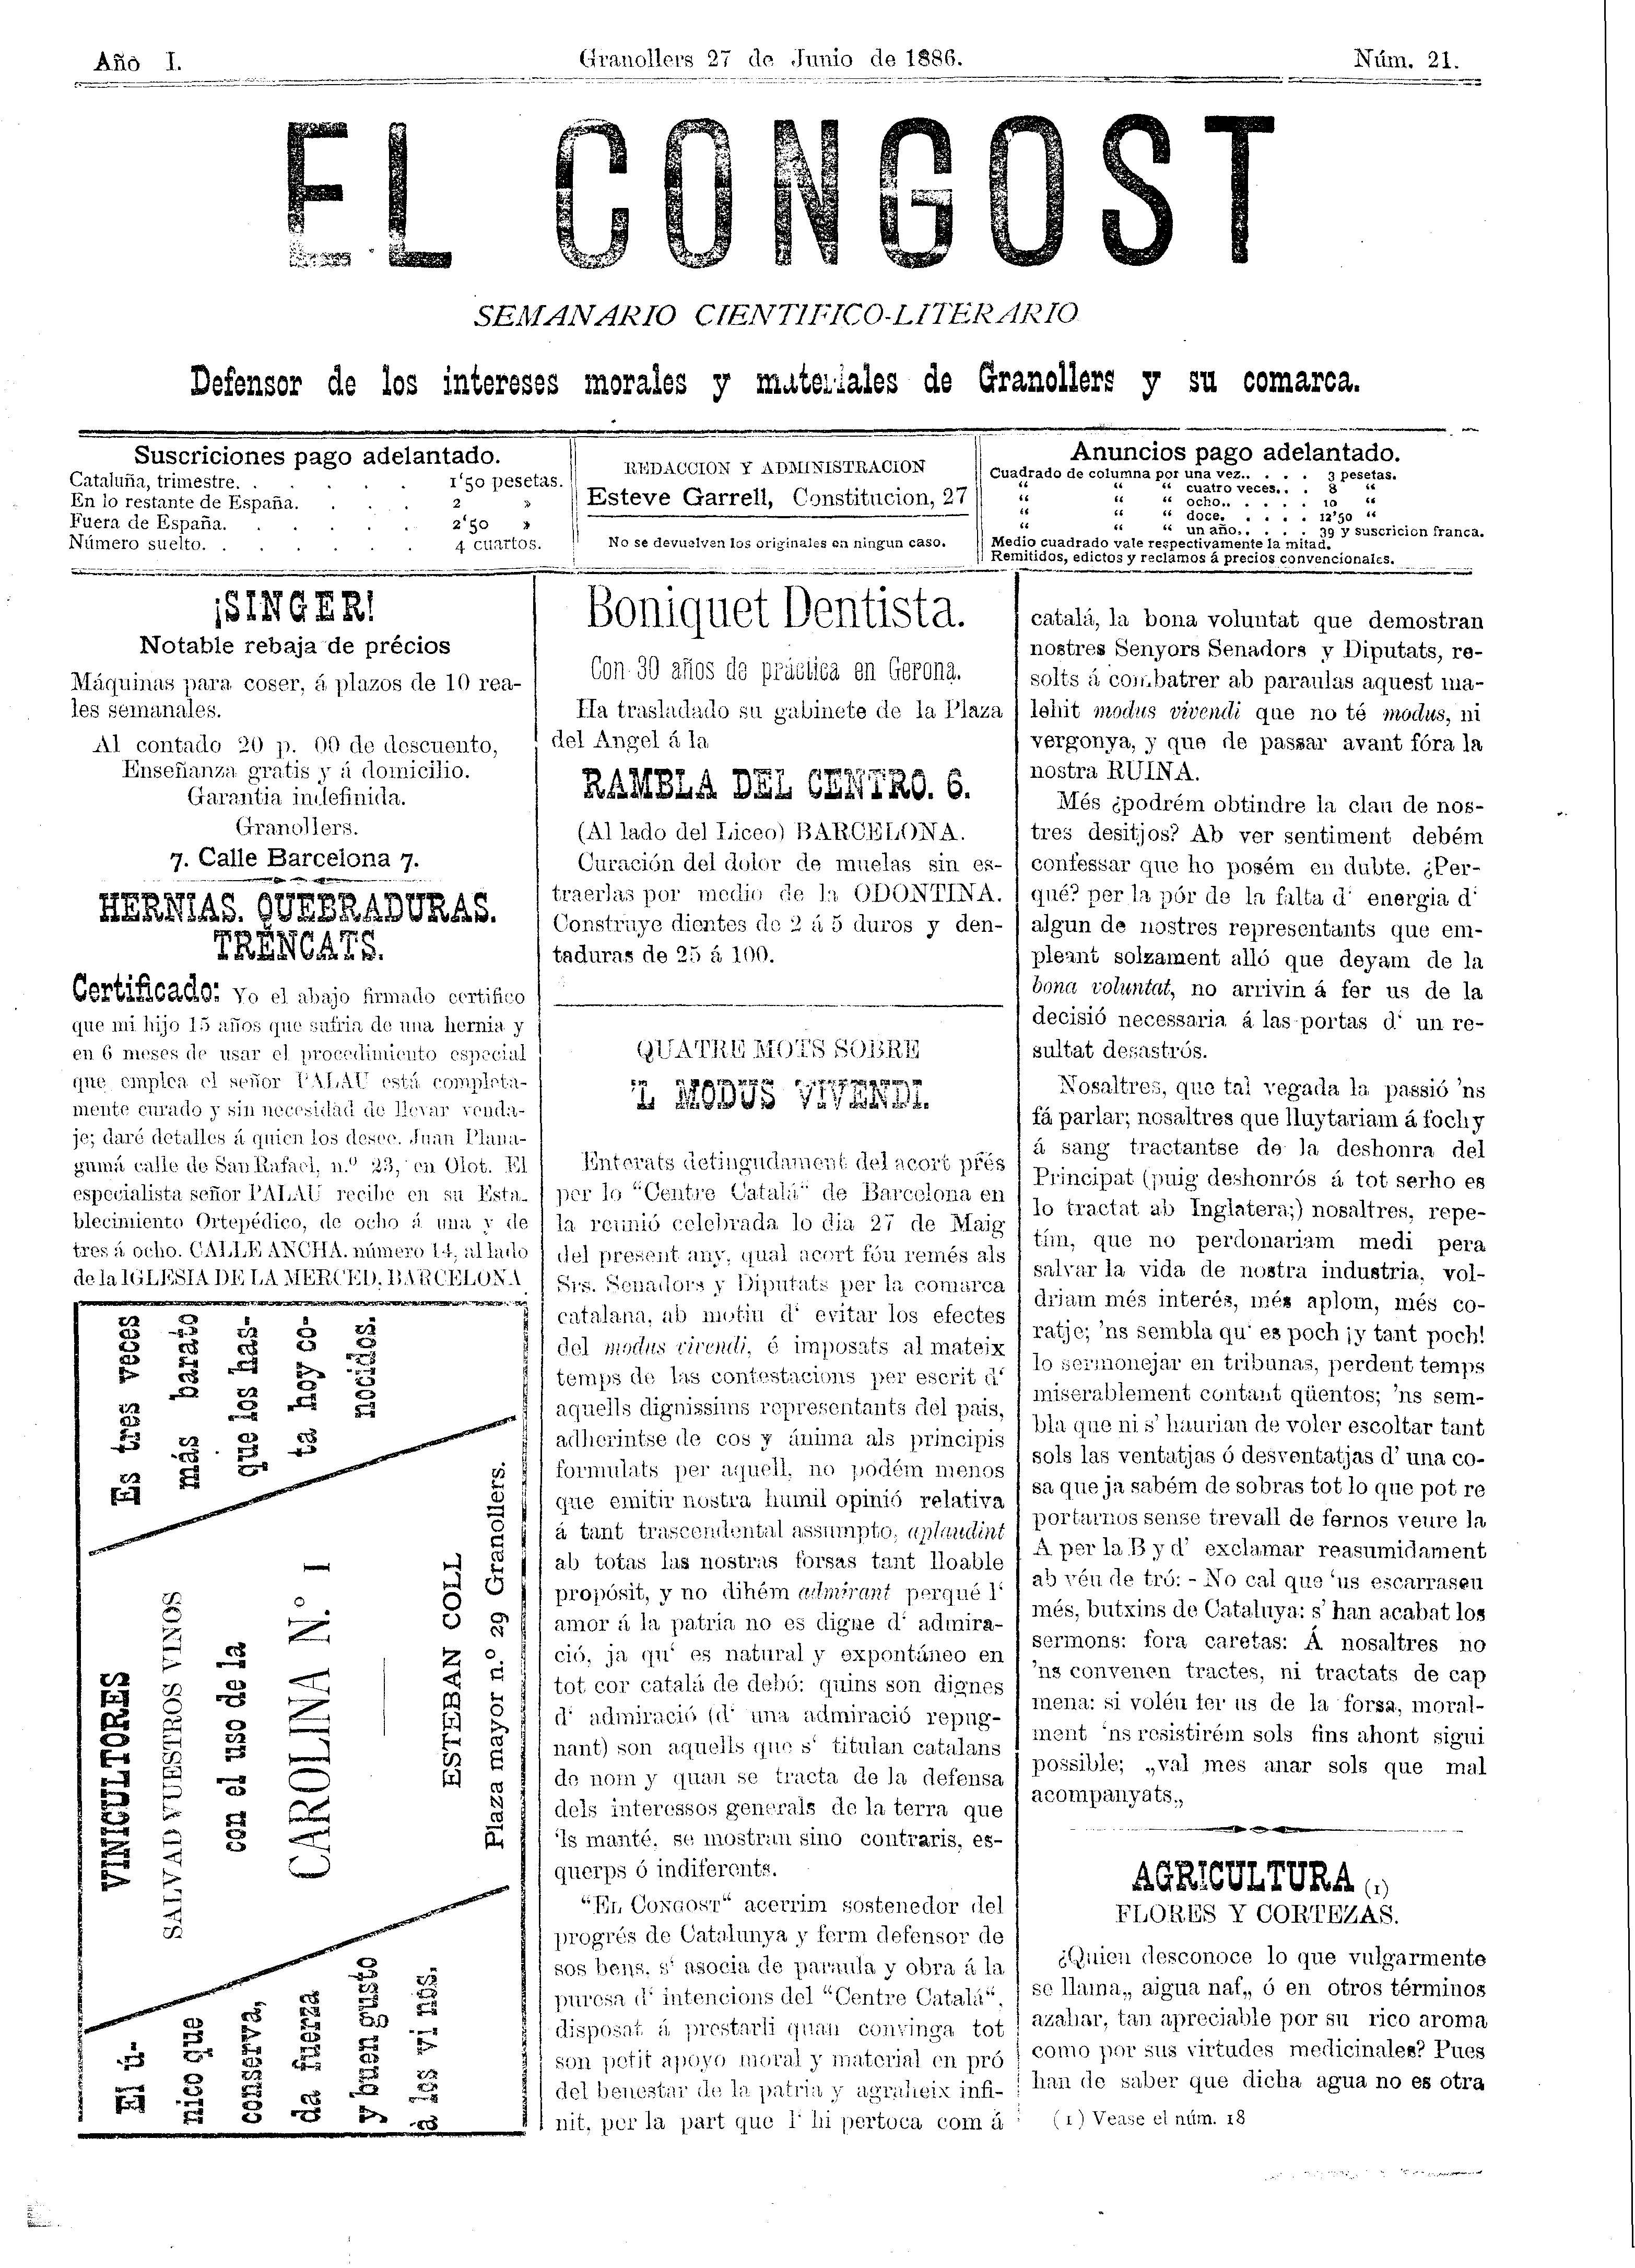 El Congost, 27/6/1886 [Exemplar]